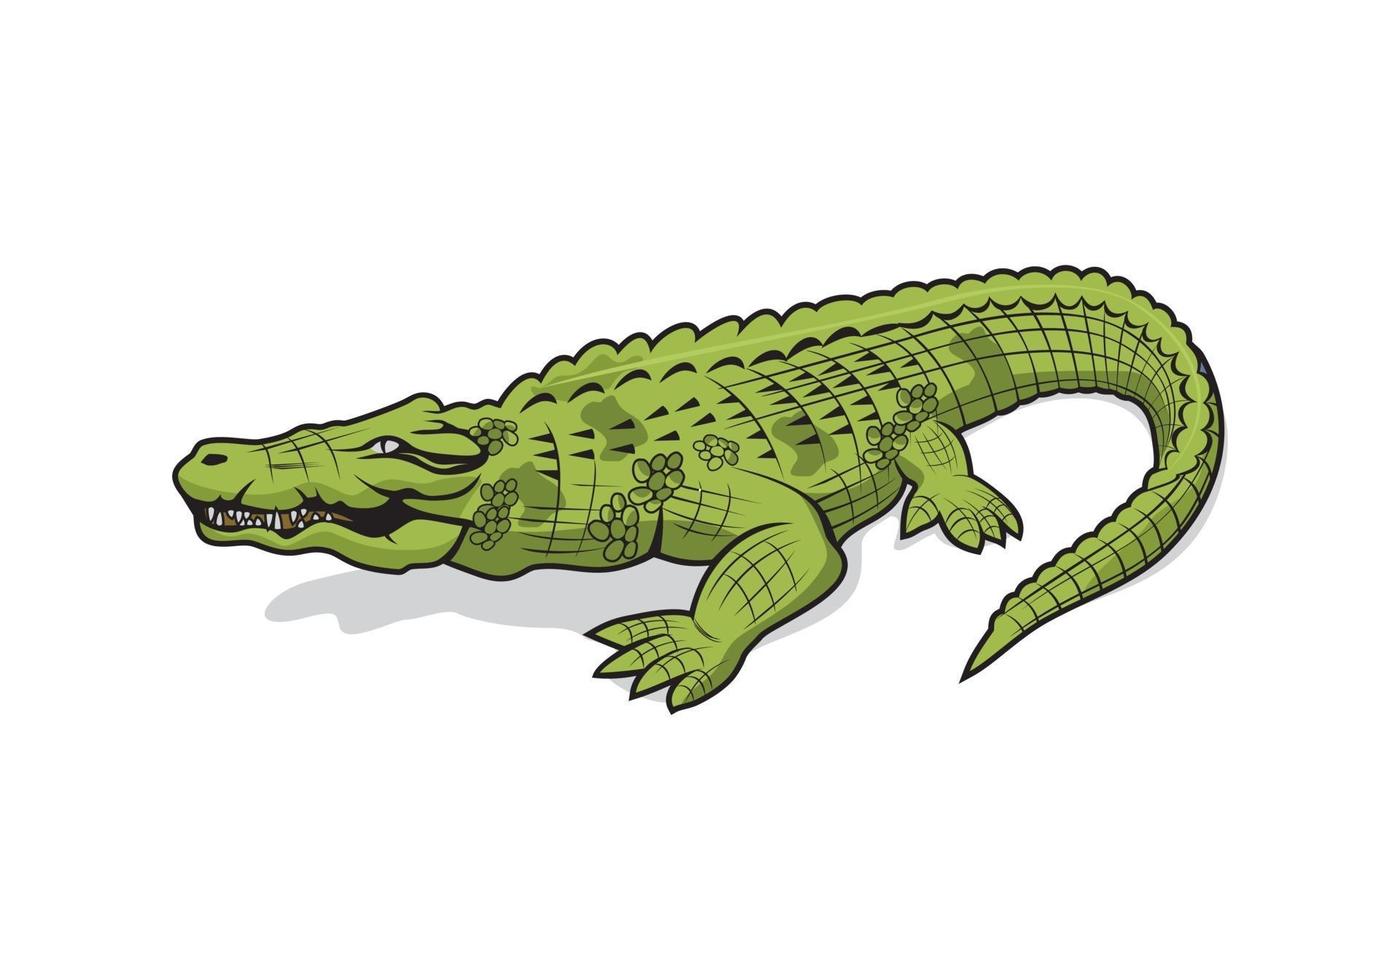 Alligator crocodile cartoon character design vector